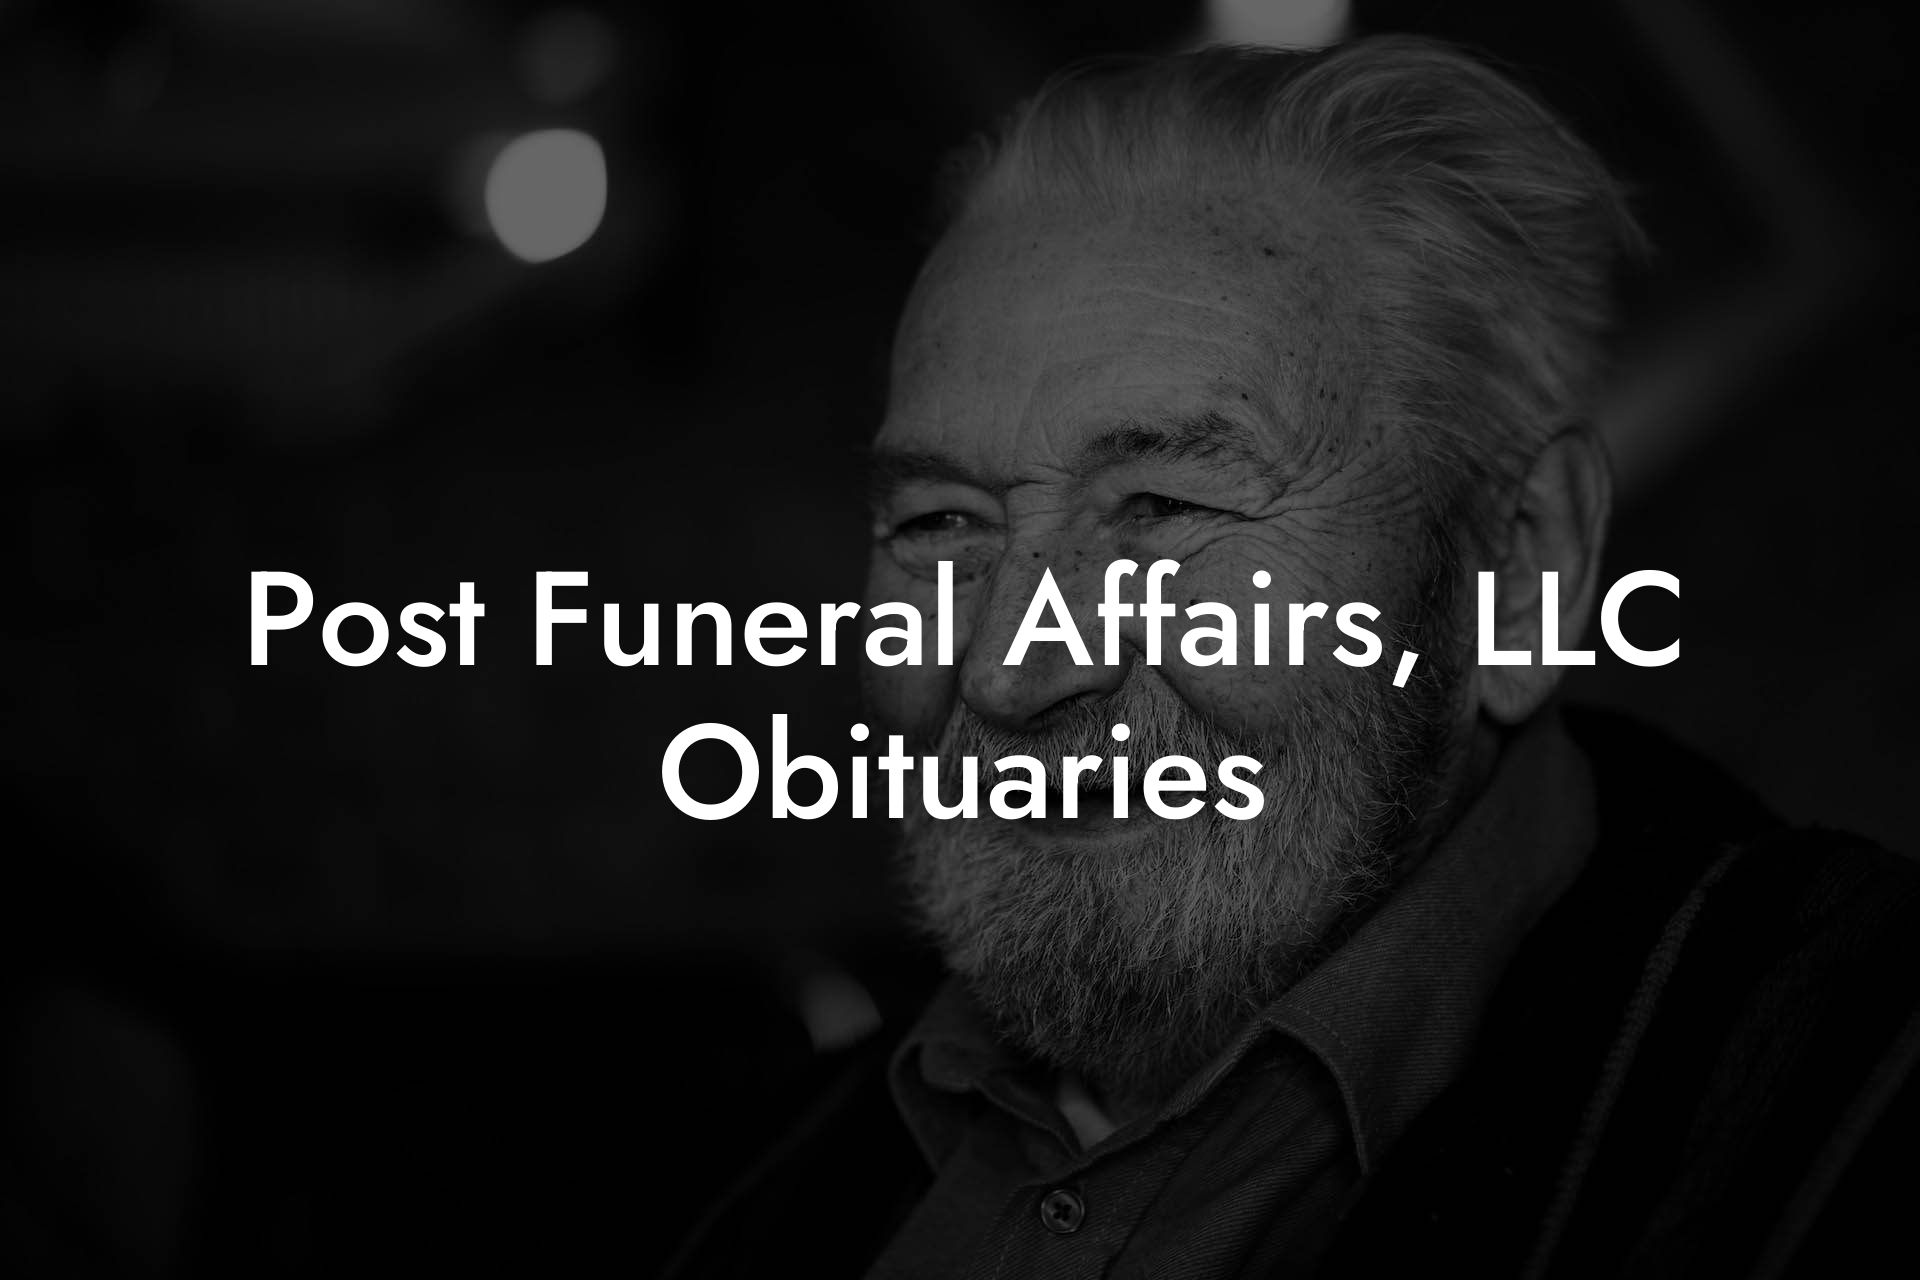 Post Funeral Affairs, LLC Obituaries